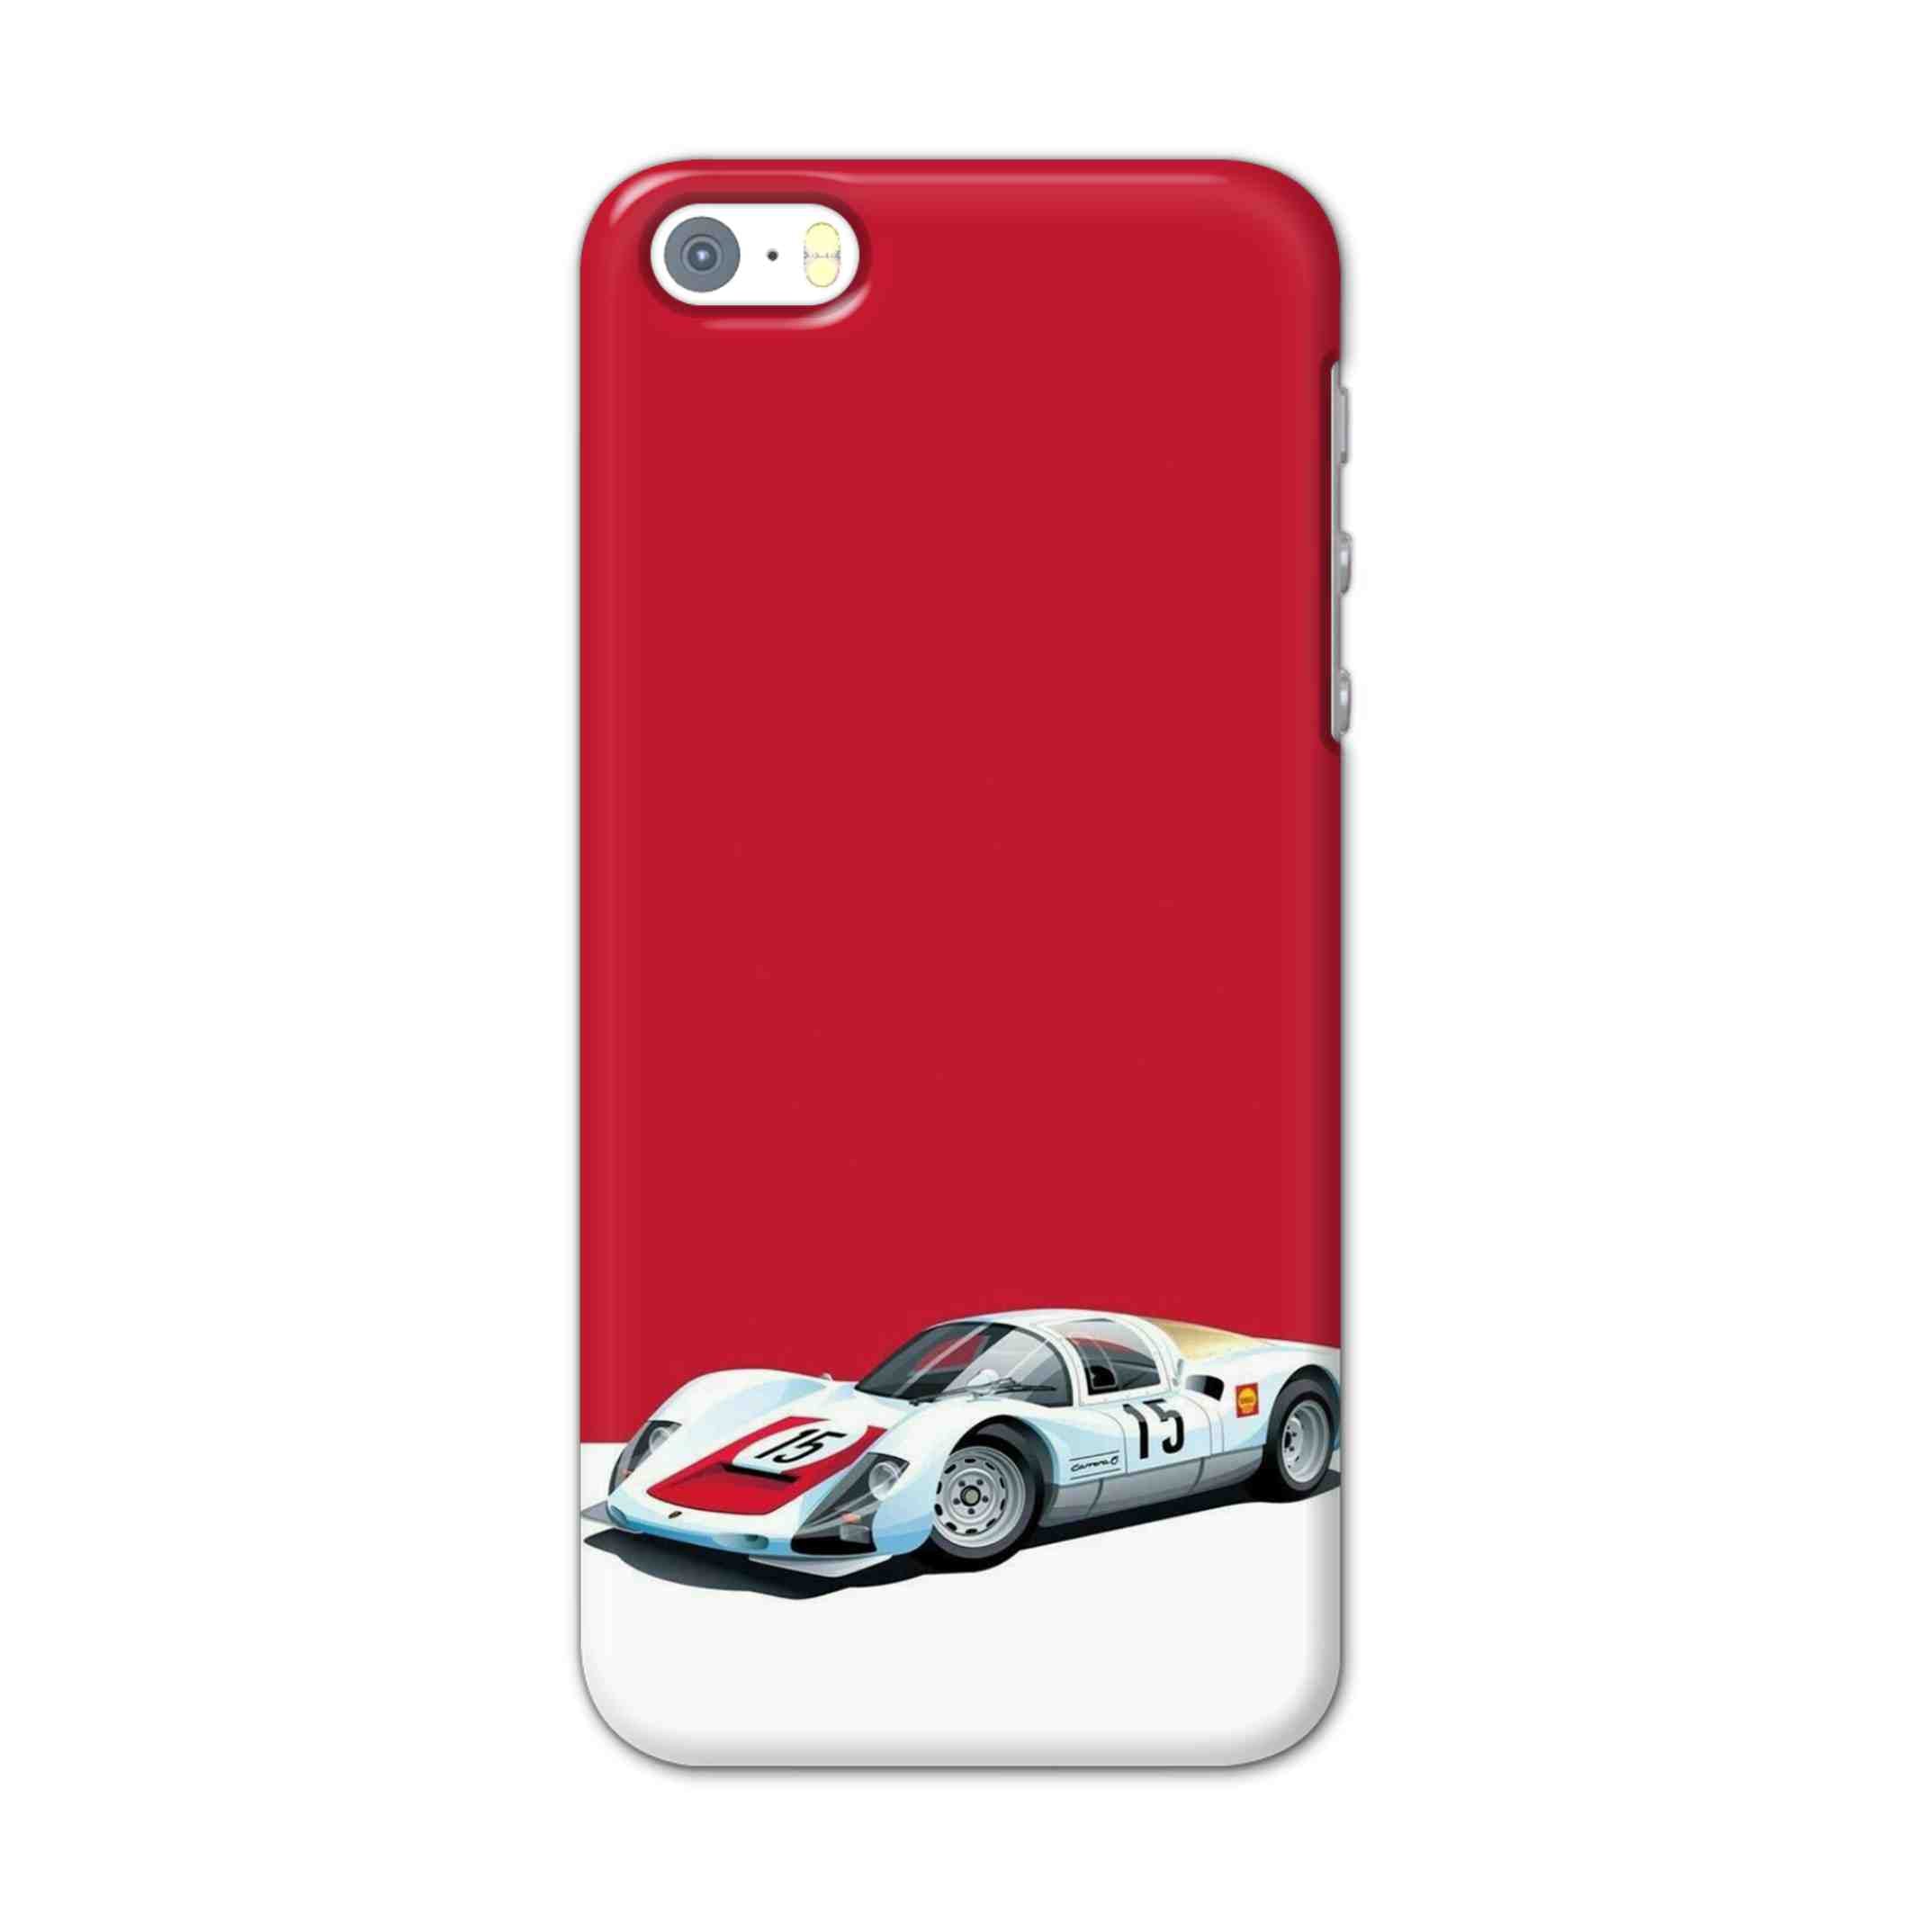 Buy Ferrari F15 Hard Back Mobile Phone Case/Cover For Apple Iphone SE Online